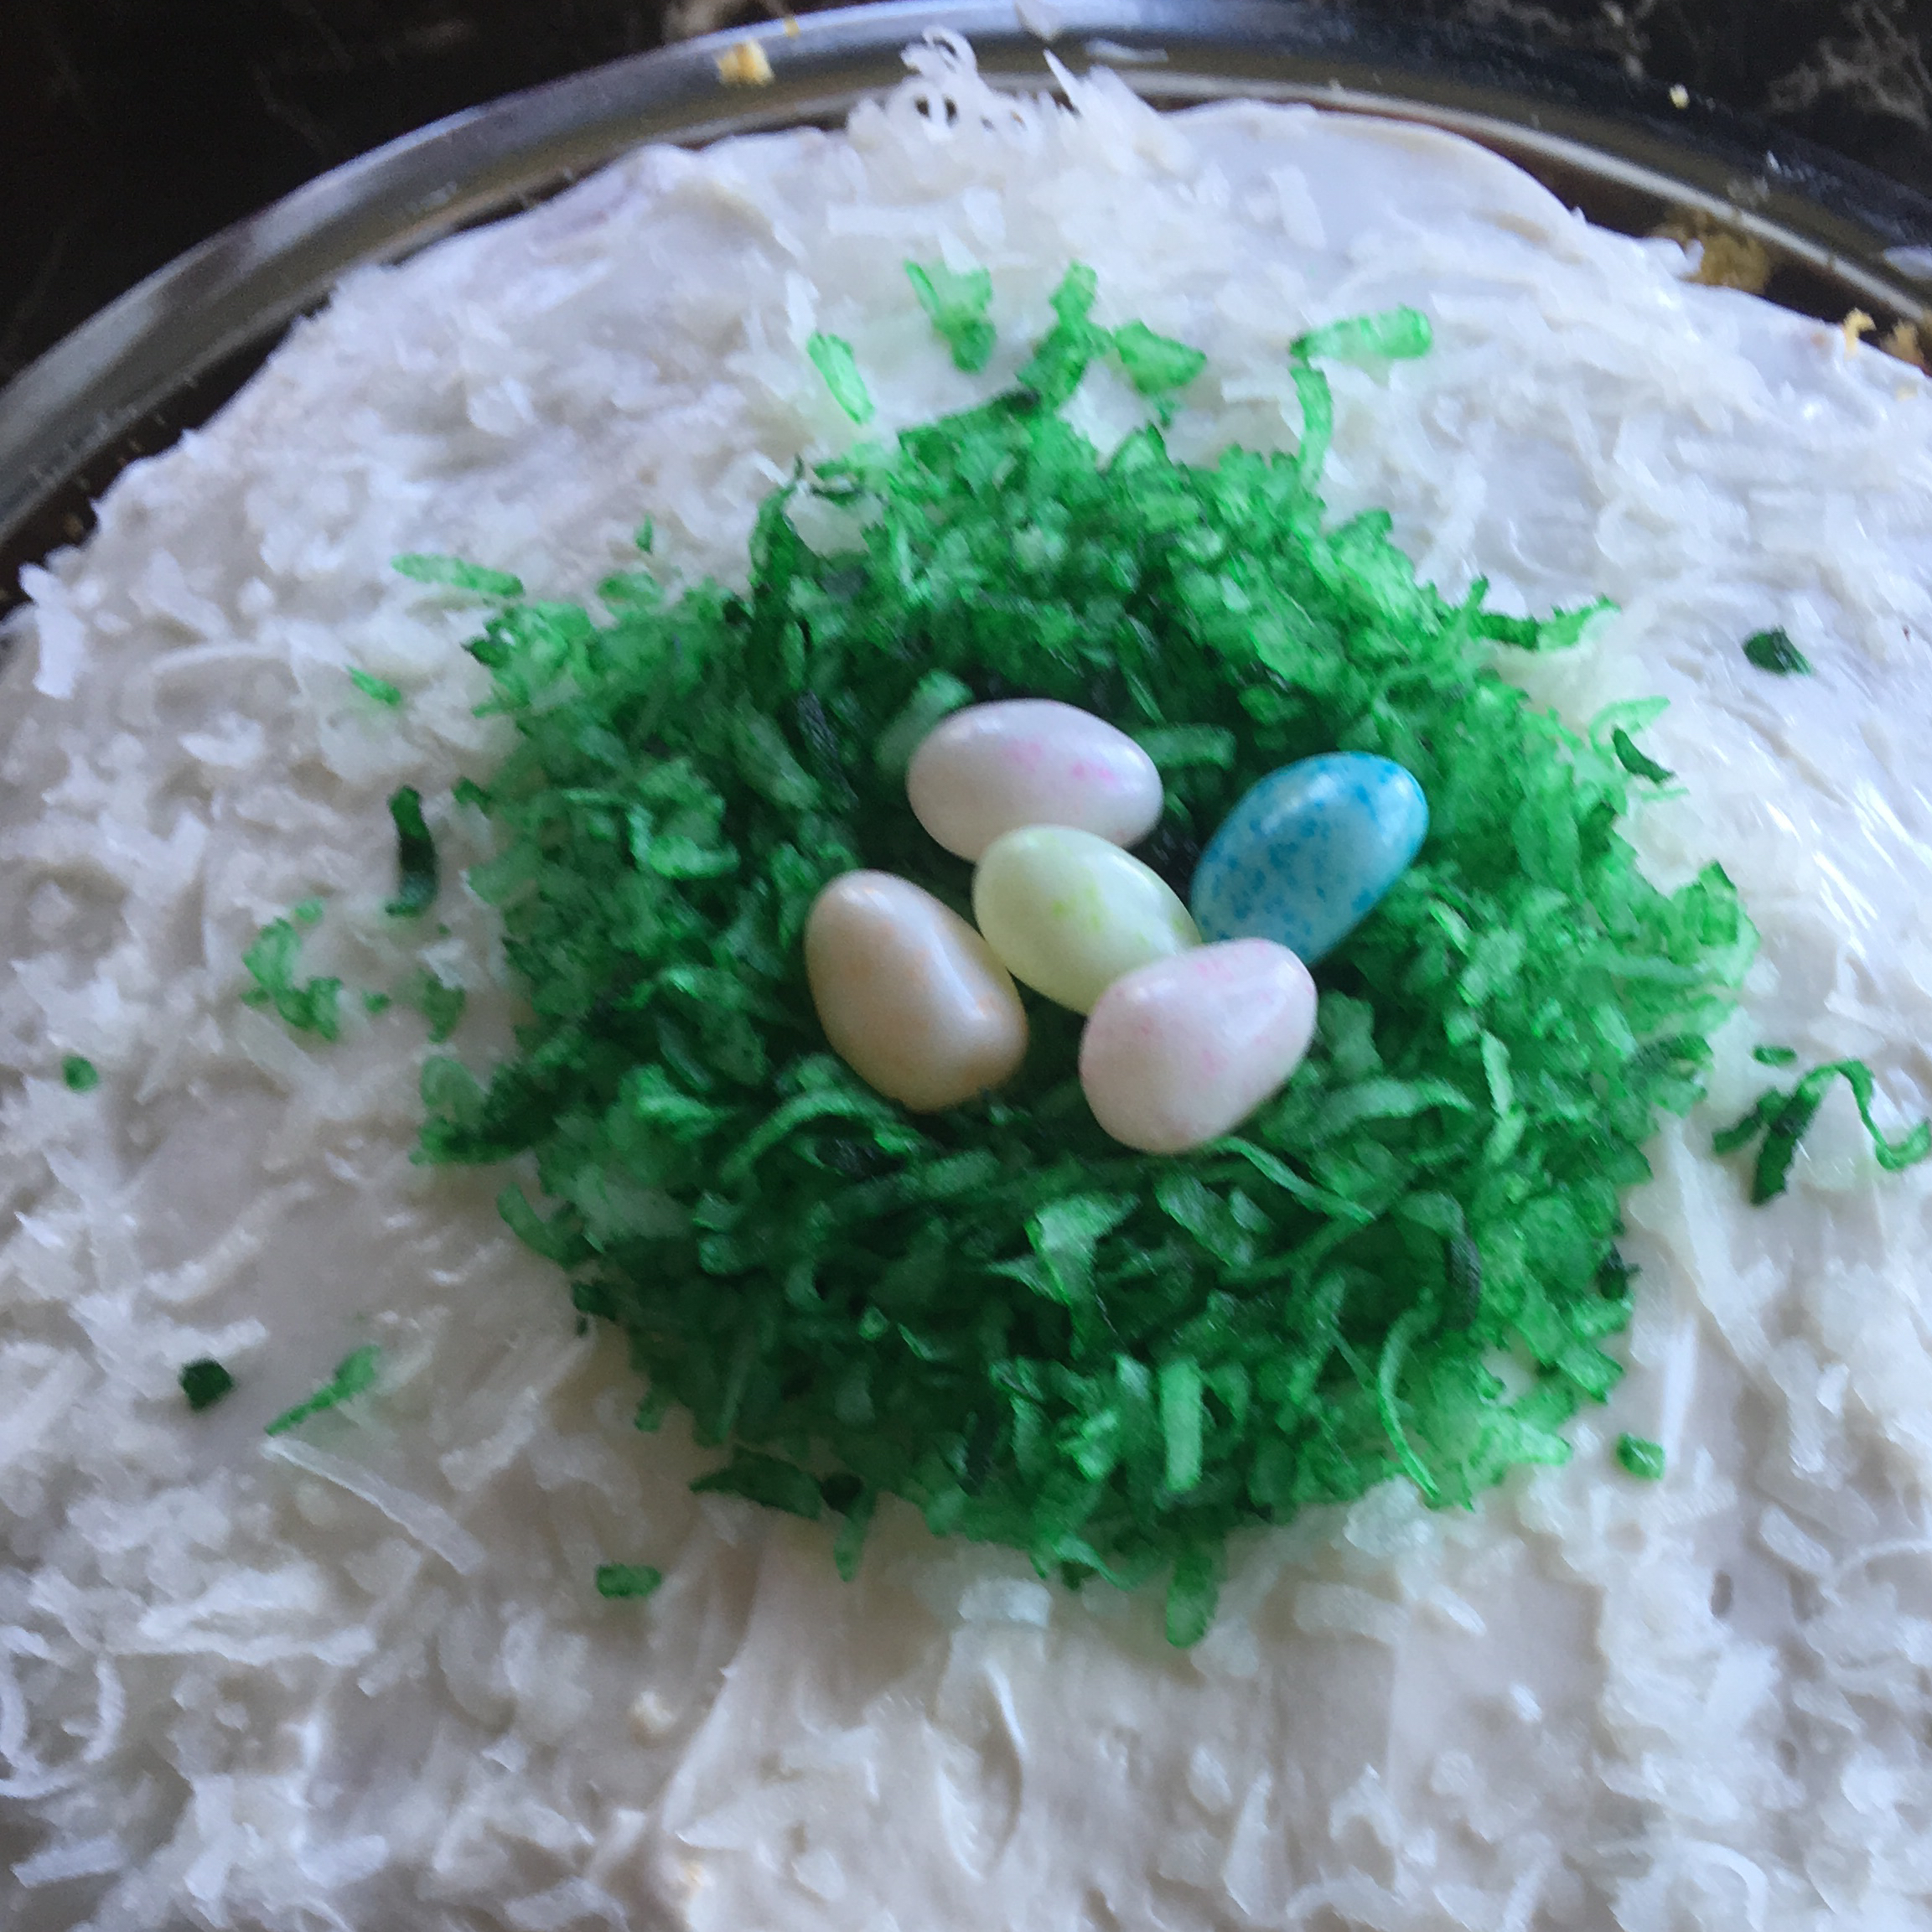 Coconut Easter Cake 